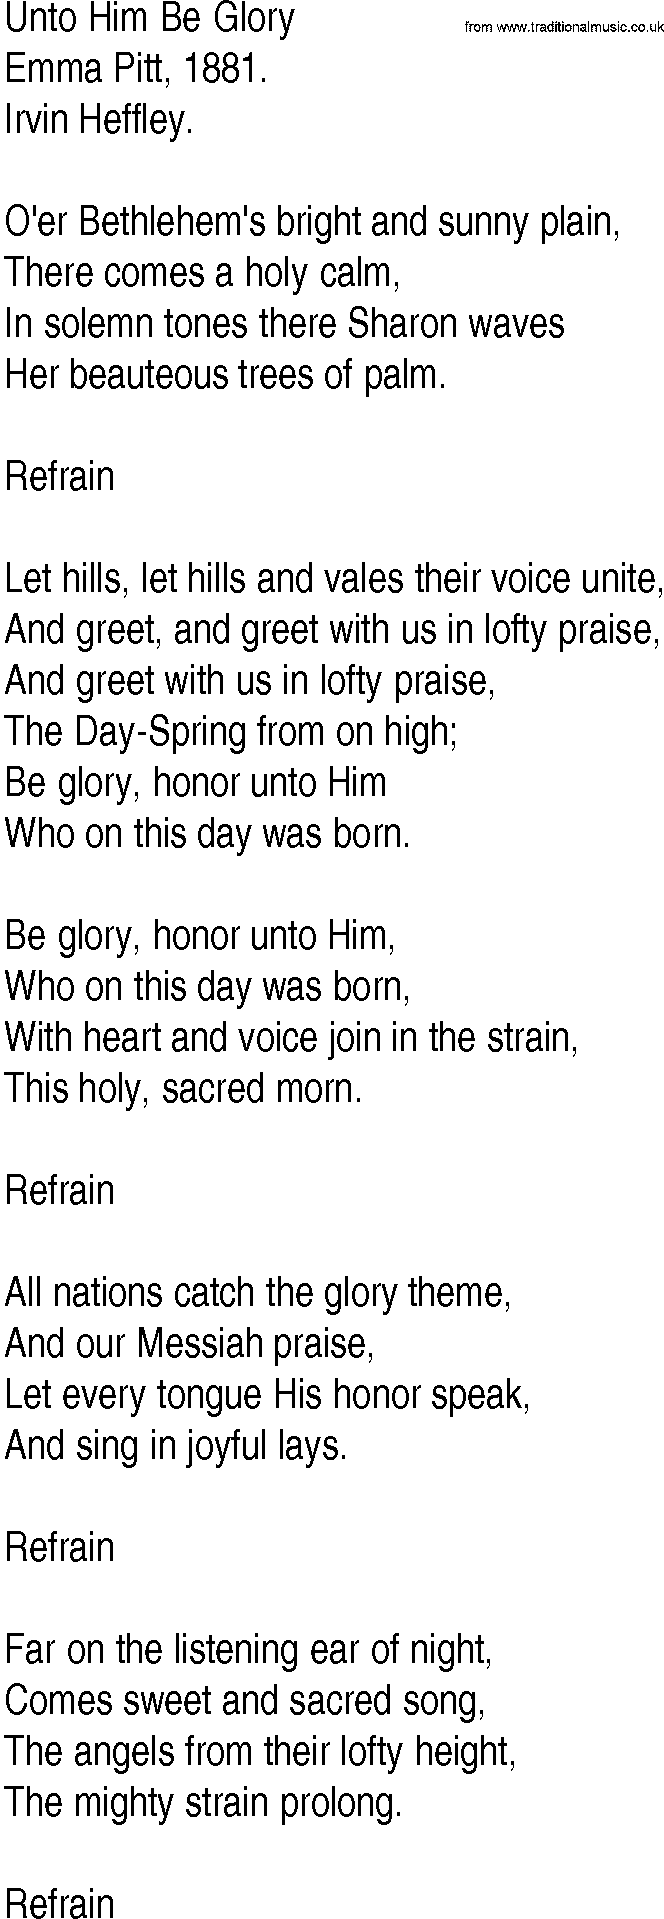 Hymn and Gospel Song: Unto Him Be Glory by Emma Pitt lyrics